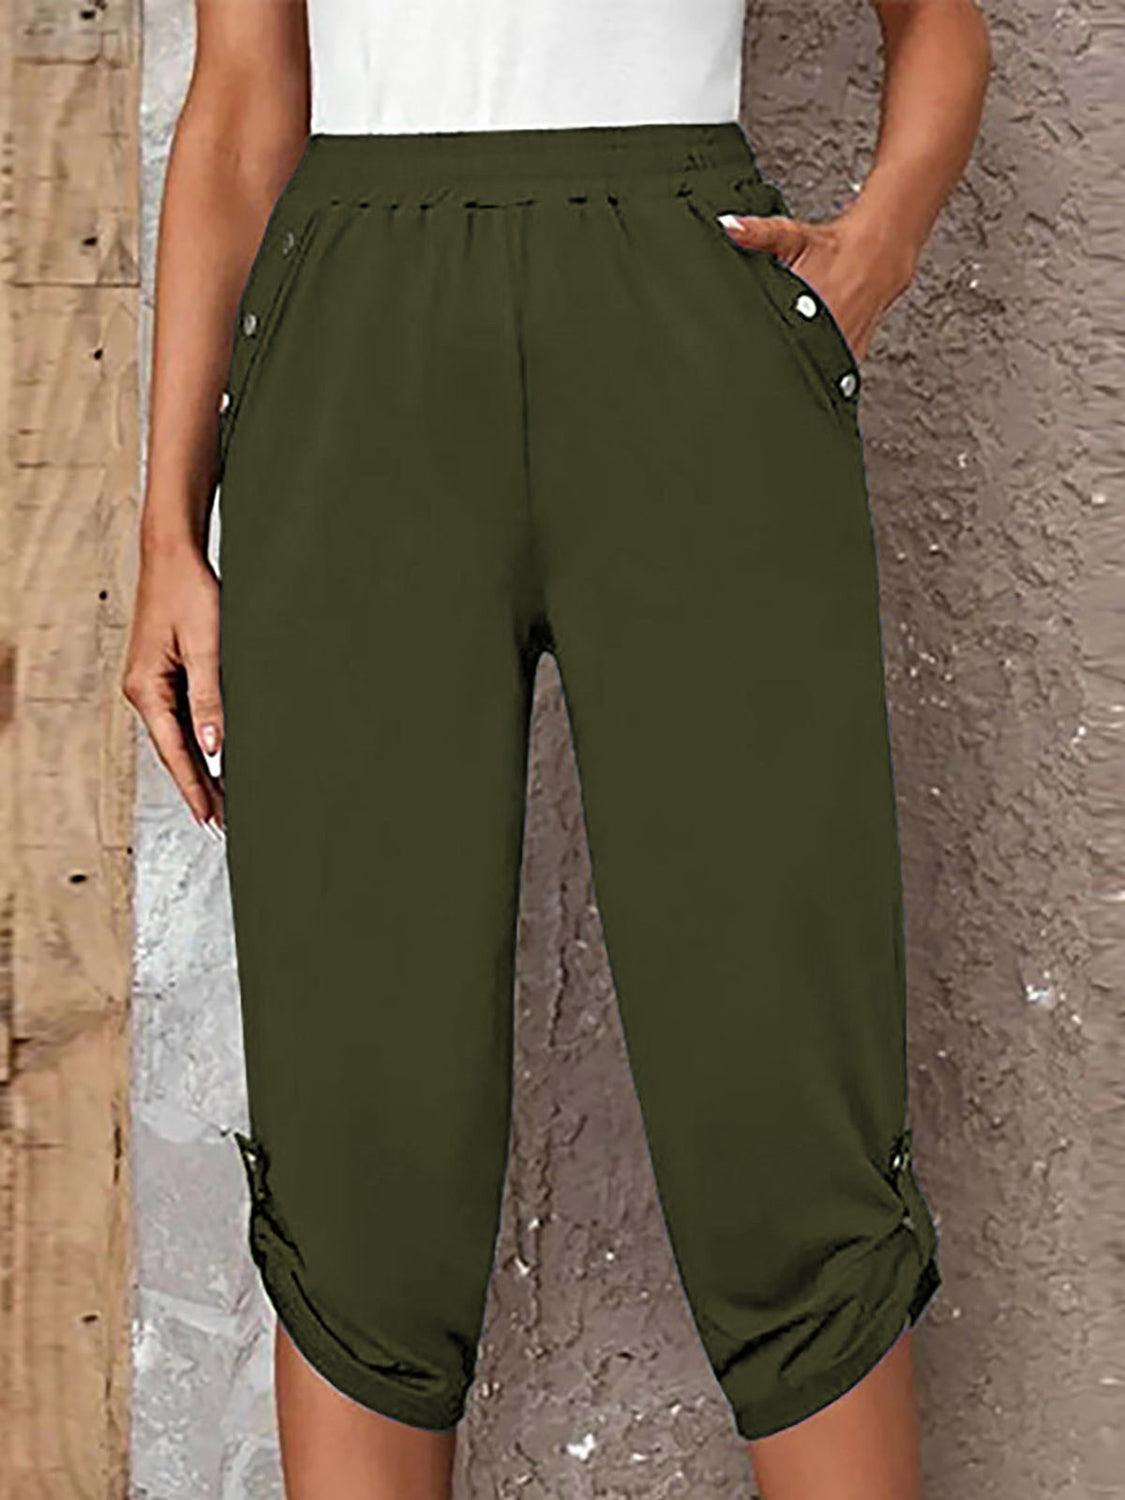 Bona Fide Fashion - Full Size Roll-Tab Capris Pants - Women Fashion - Bona Fide Fashion